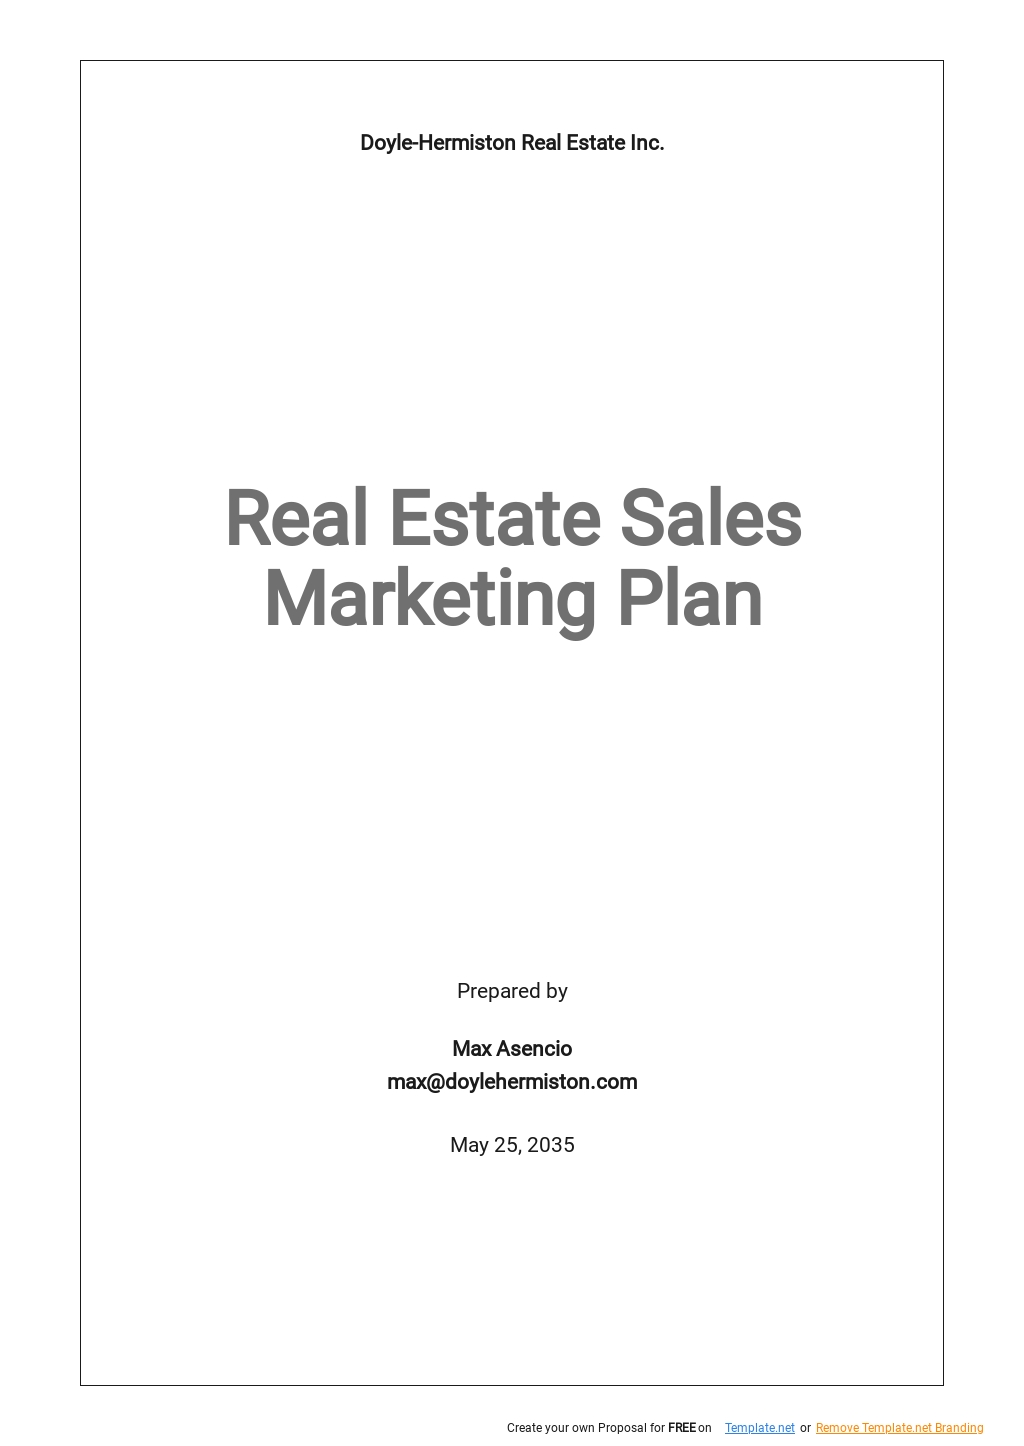 Real Estate Sales Marketing Plan Template.jpe